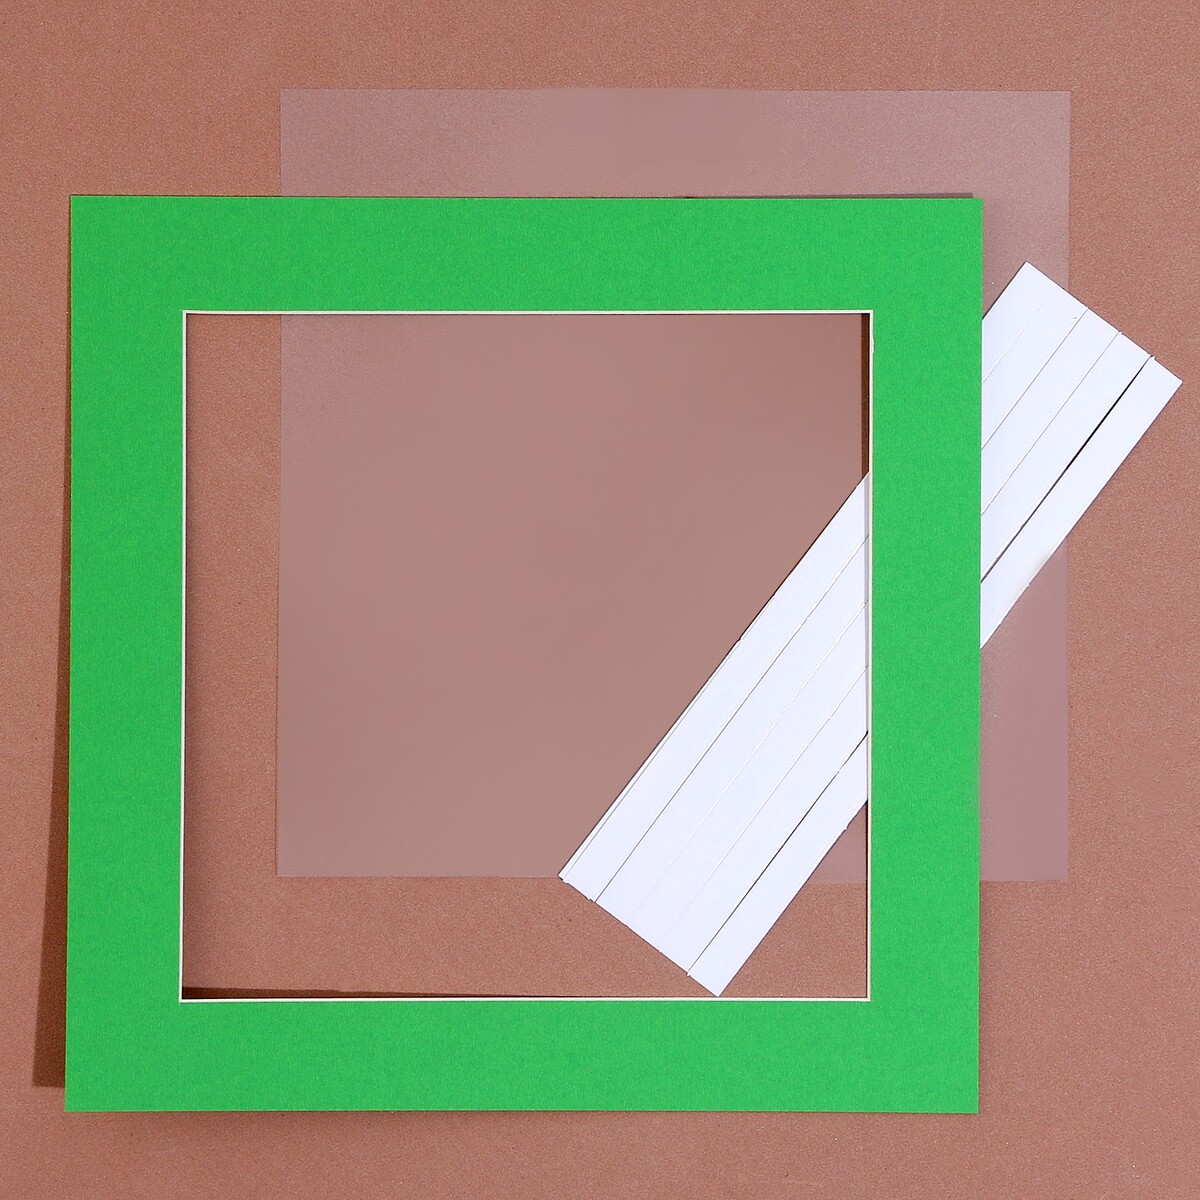 Паспарту размер рамки 24 × 24 см, прозрачный лист, клейкая лента, цвет зеленый